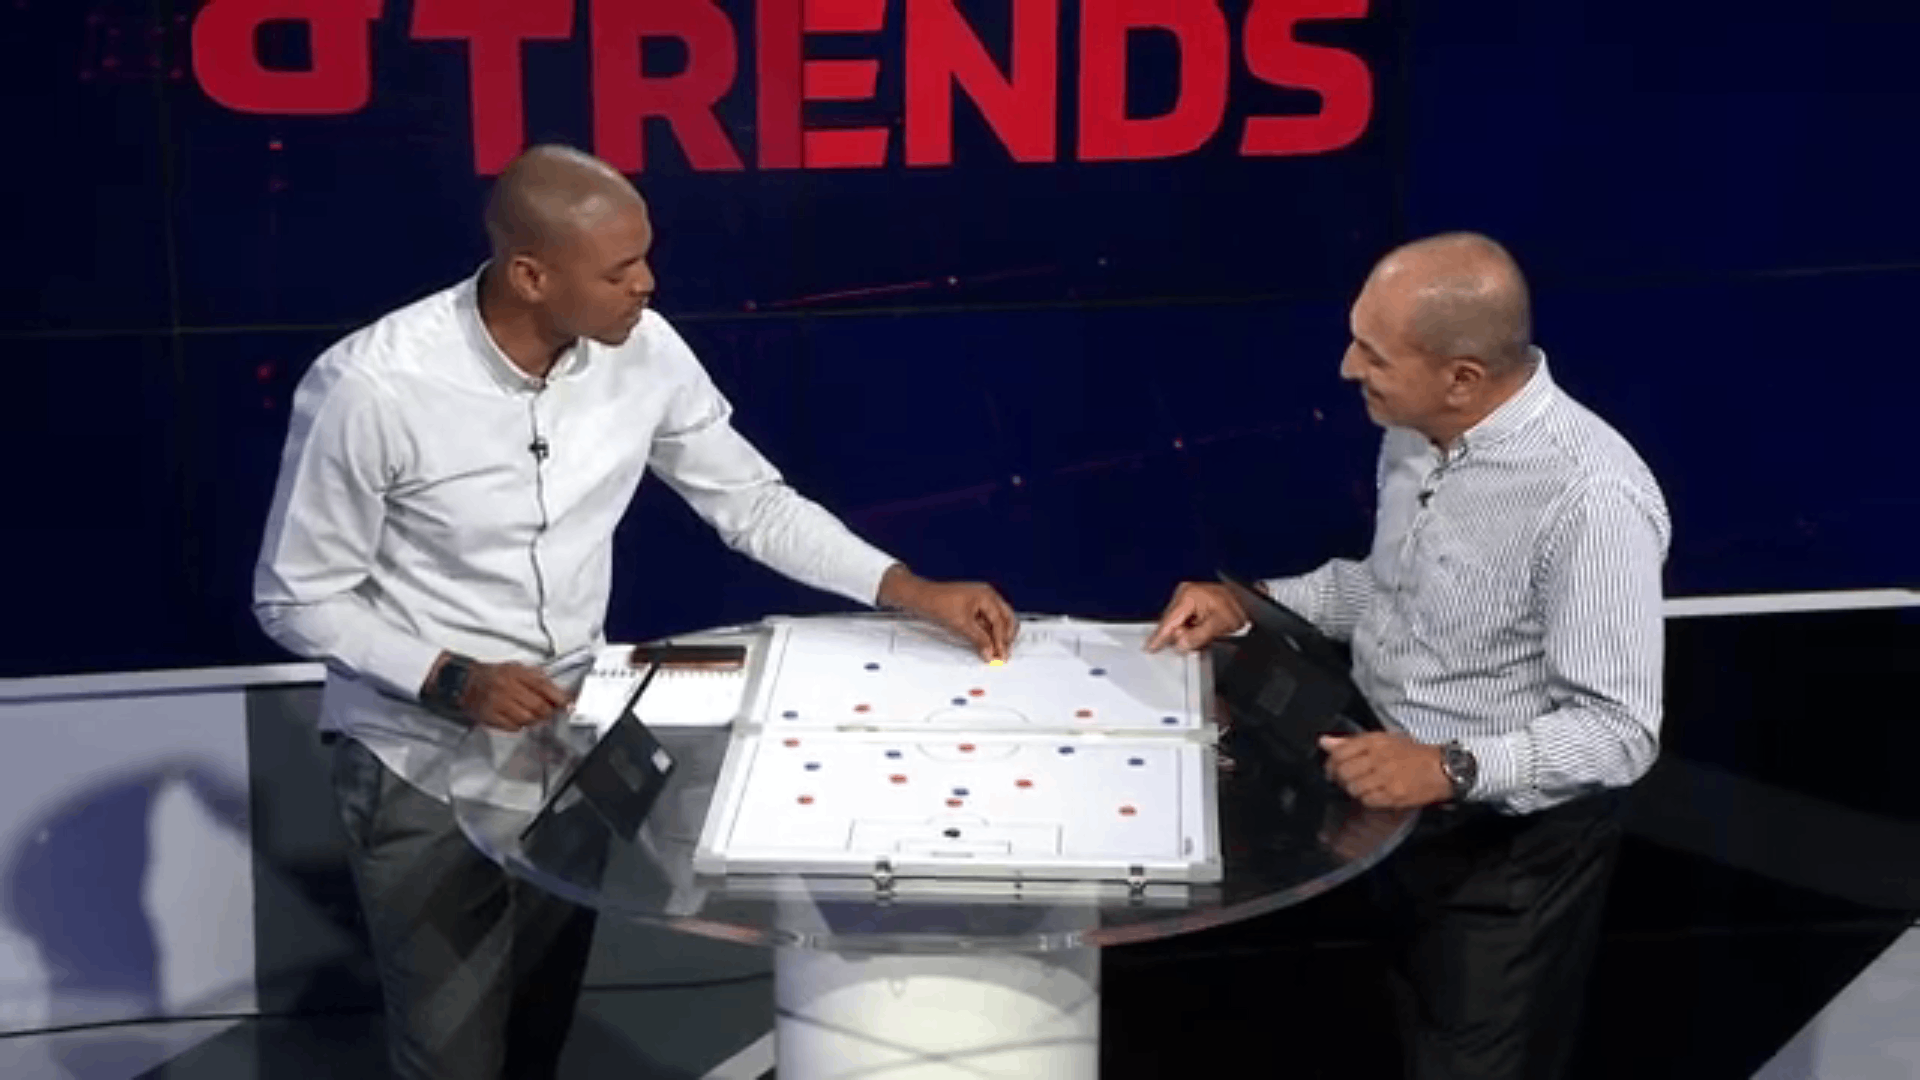 DSTV Premiership | Modern football tactics and trends